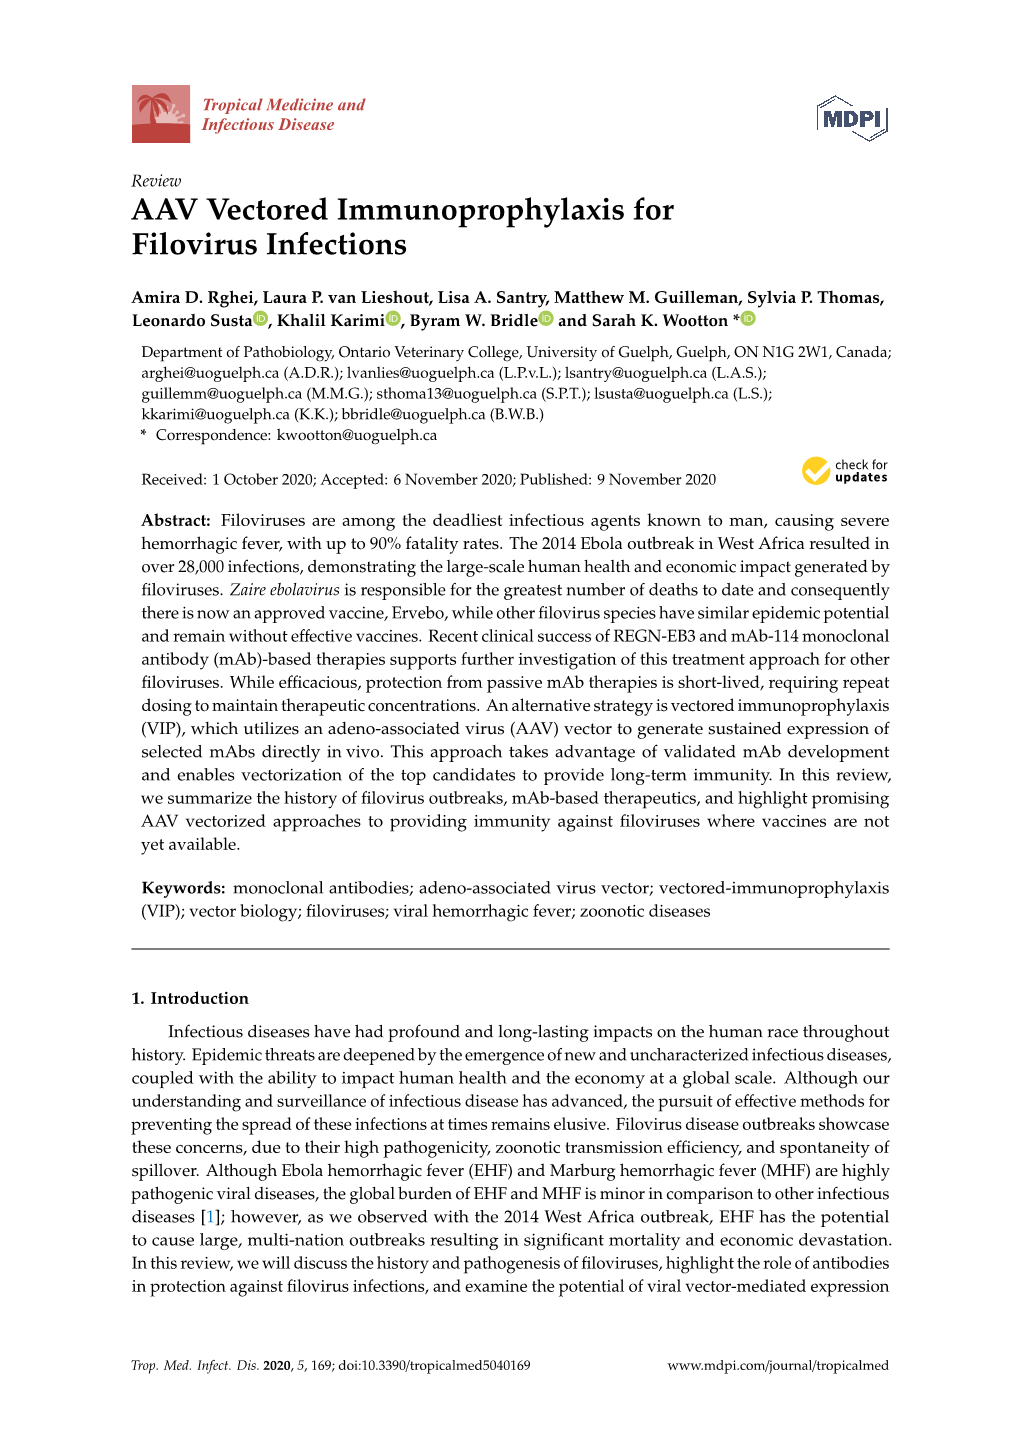 AAV Vectored Immunoprophylaxis for Filovirus Infections